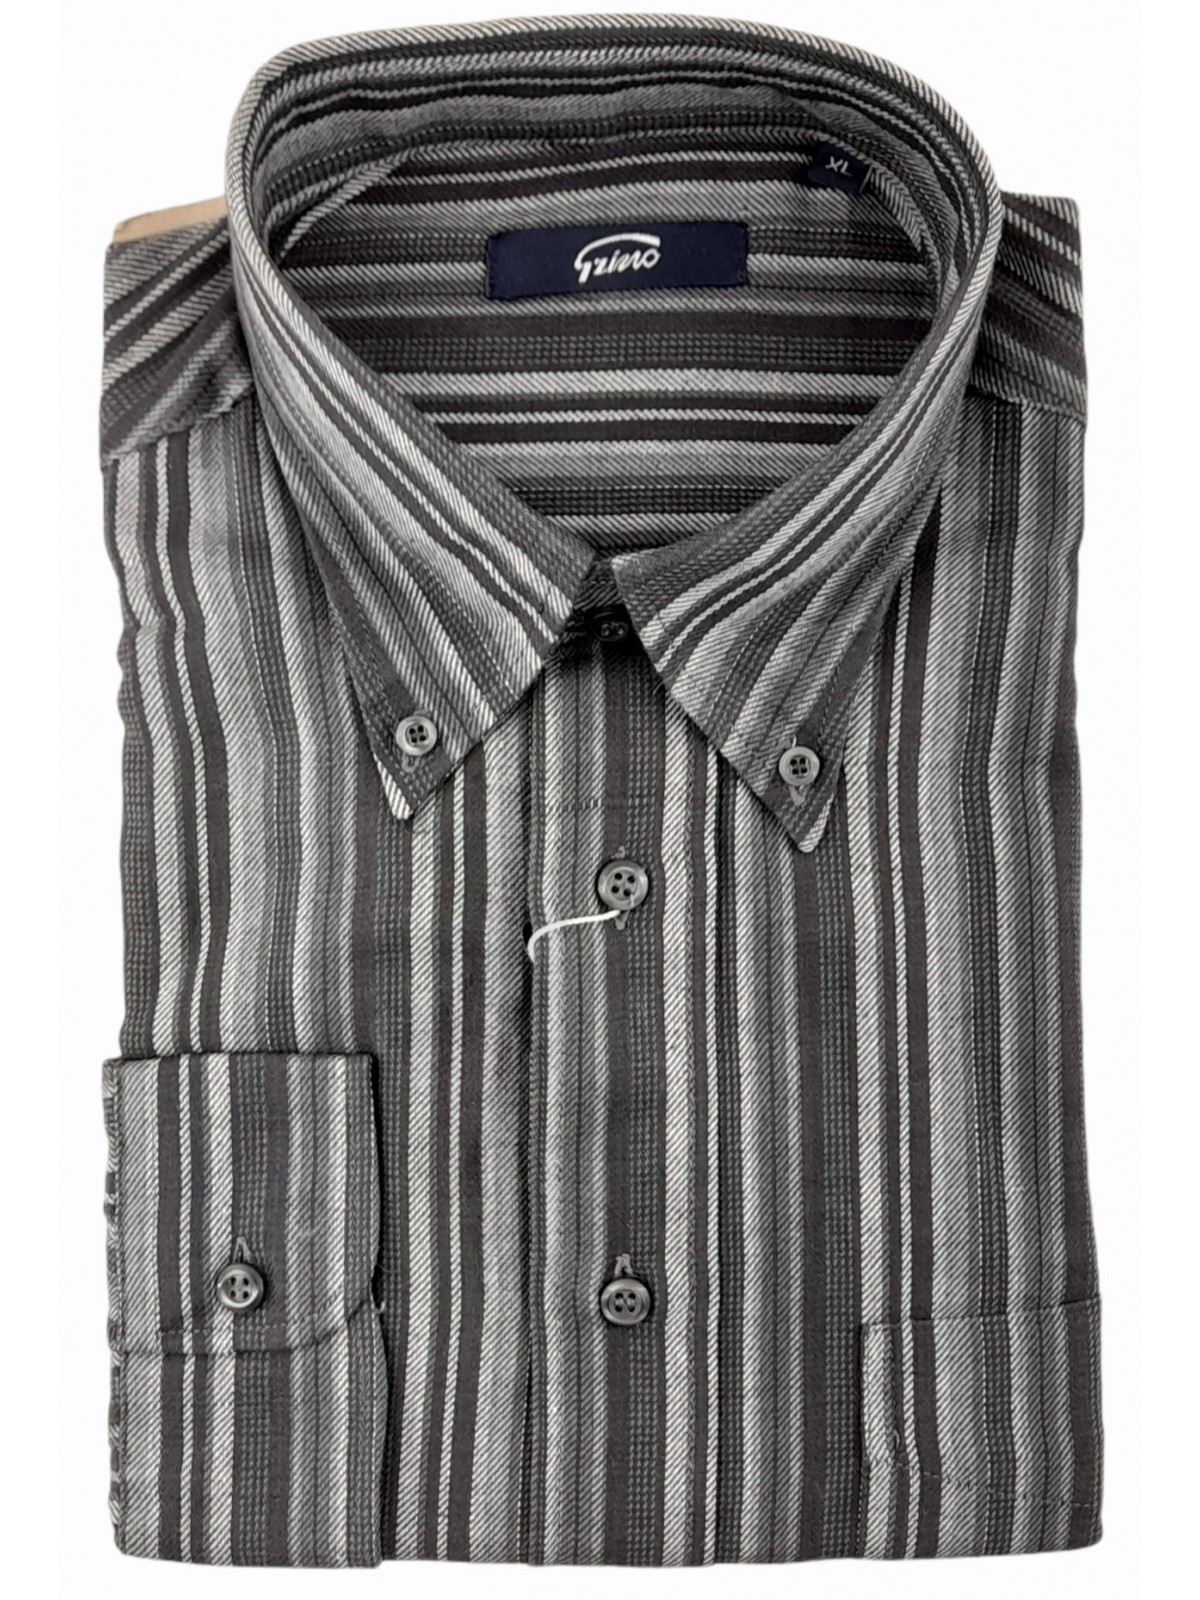 Man Shirt XL Flannel ButtonDown Light and Dark Gray Stripes